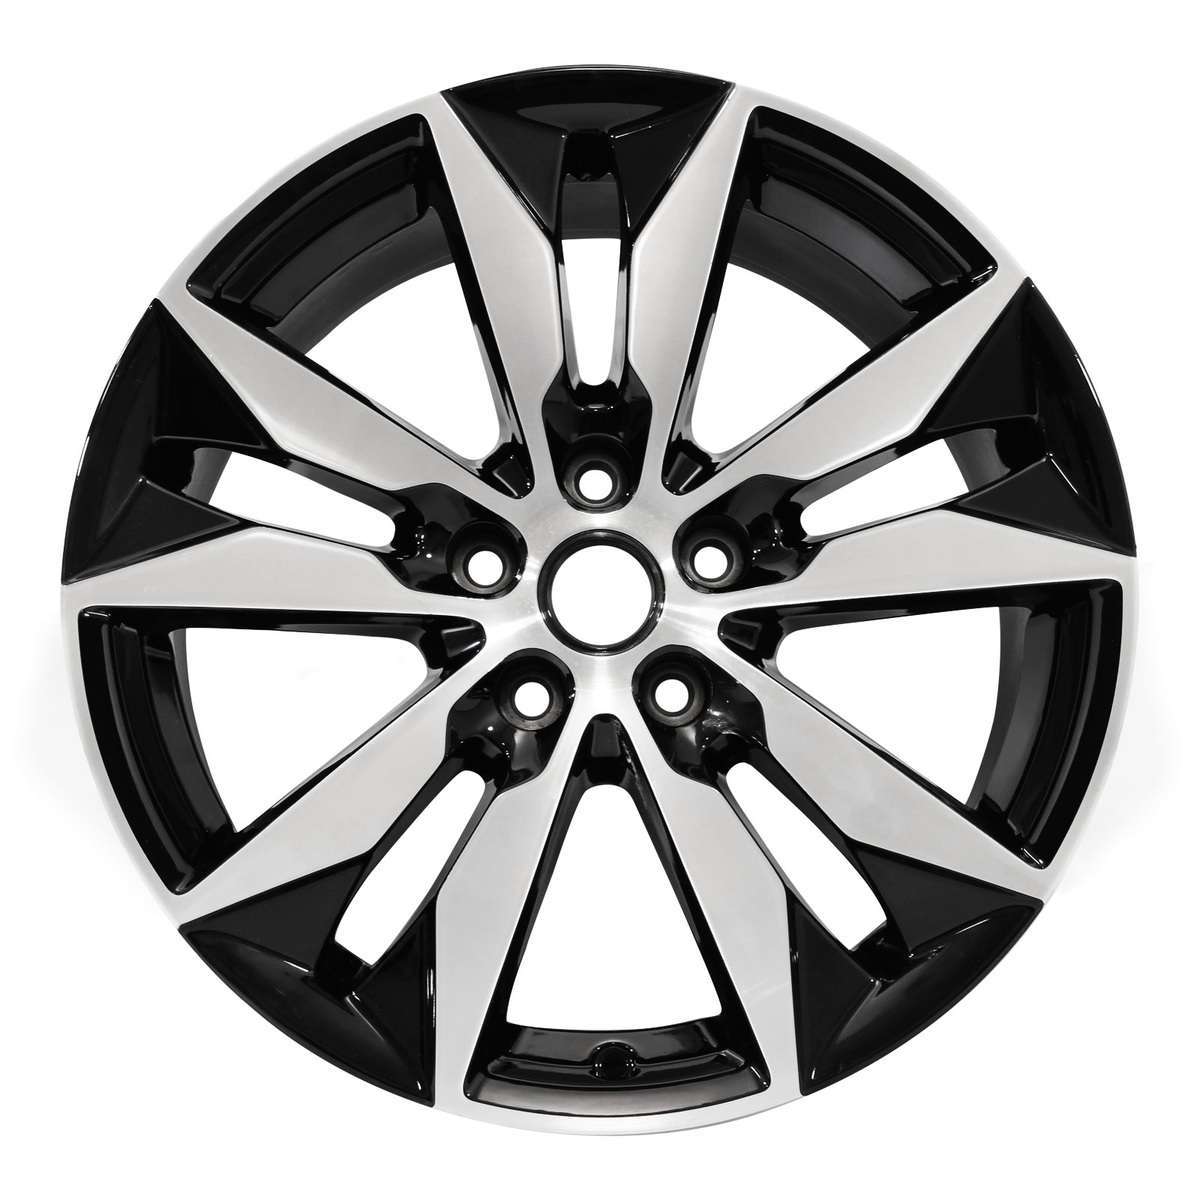 2021 Chevrolet Malibu New 18" Replacement Wheel Rim RW5716MB